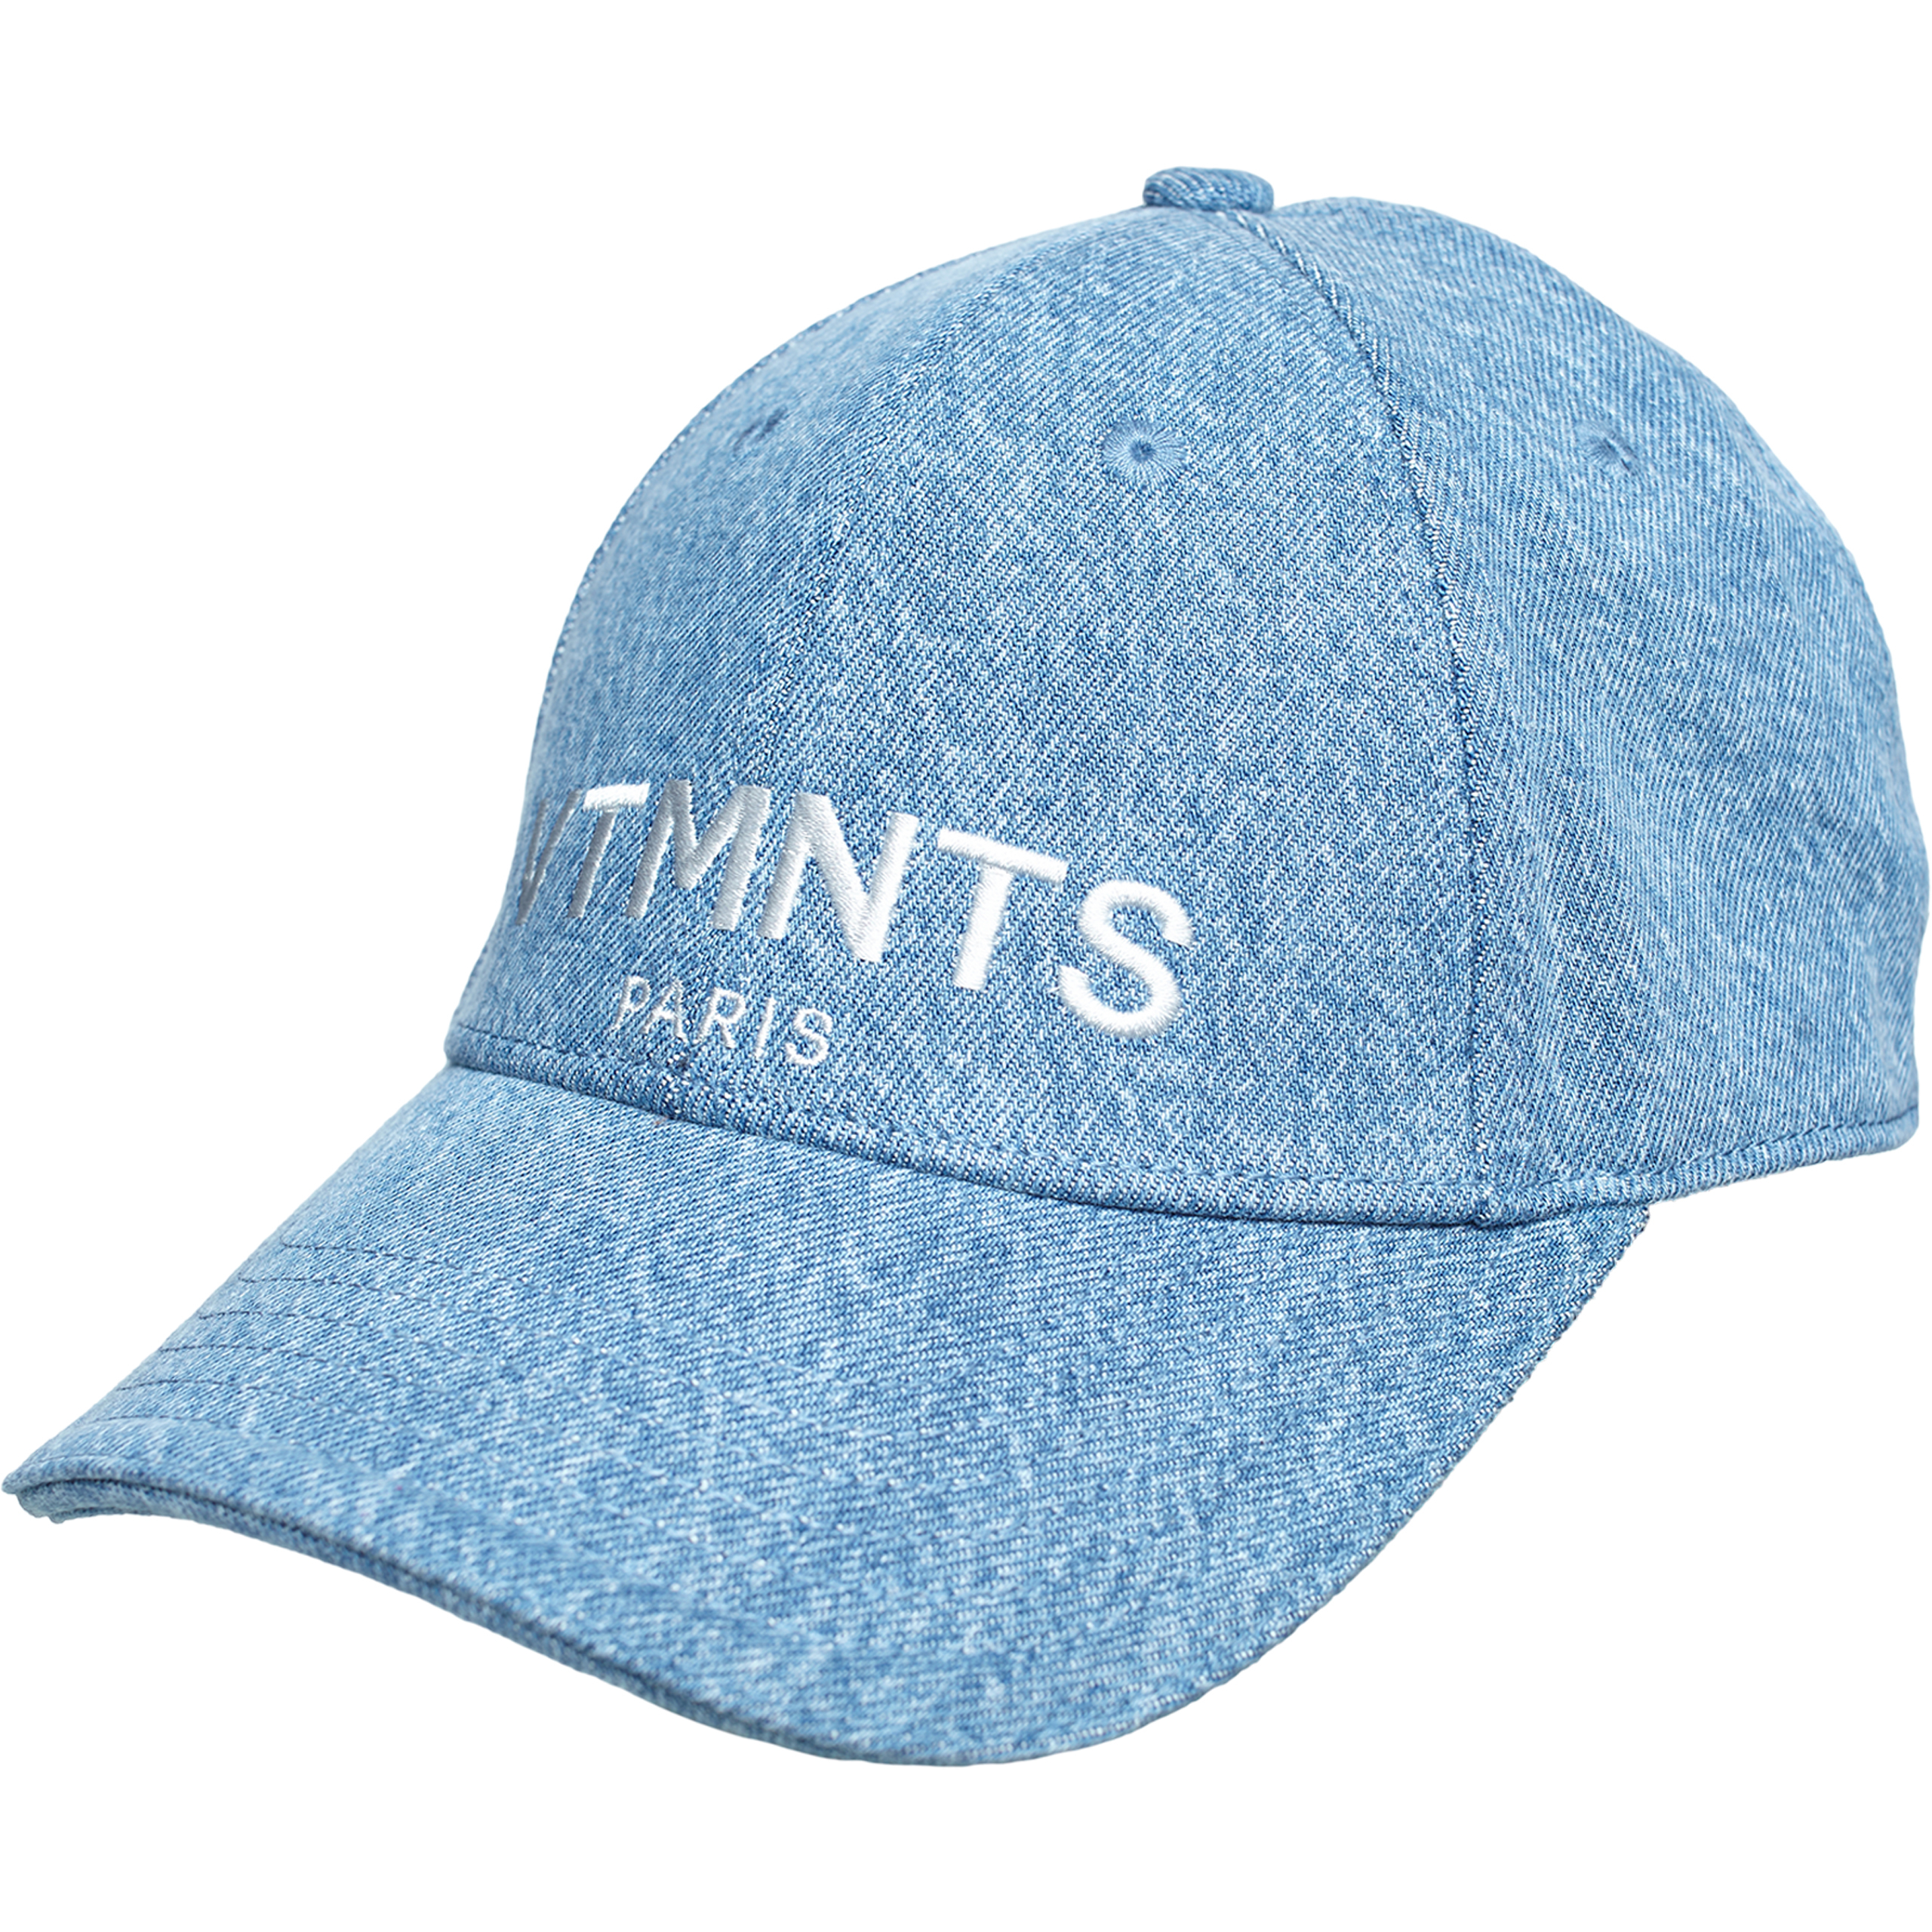 Джинсовая кепка с вышивкой логотипа VTMNTS VL20CA200NW/5401, размер One Size VL20CA200NW/5401 - фото 1